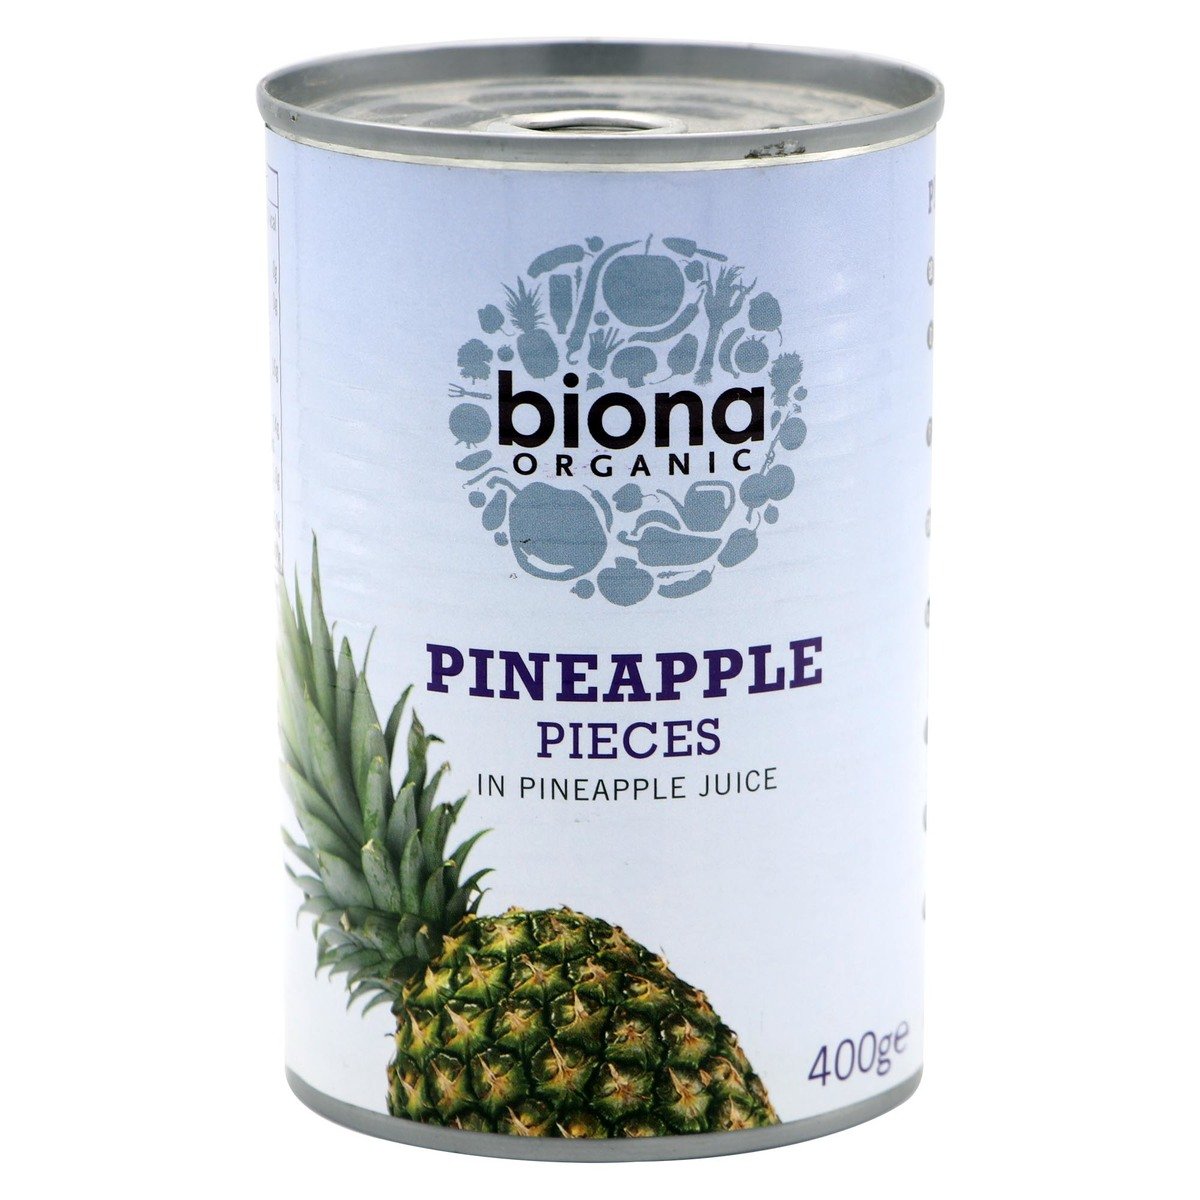 Biona Organic Pineapple Pieces In Pineapple Juice 400g